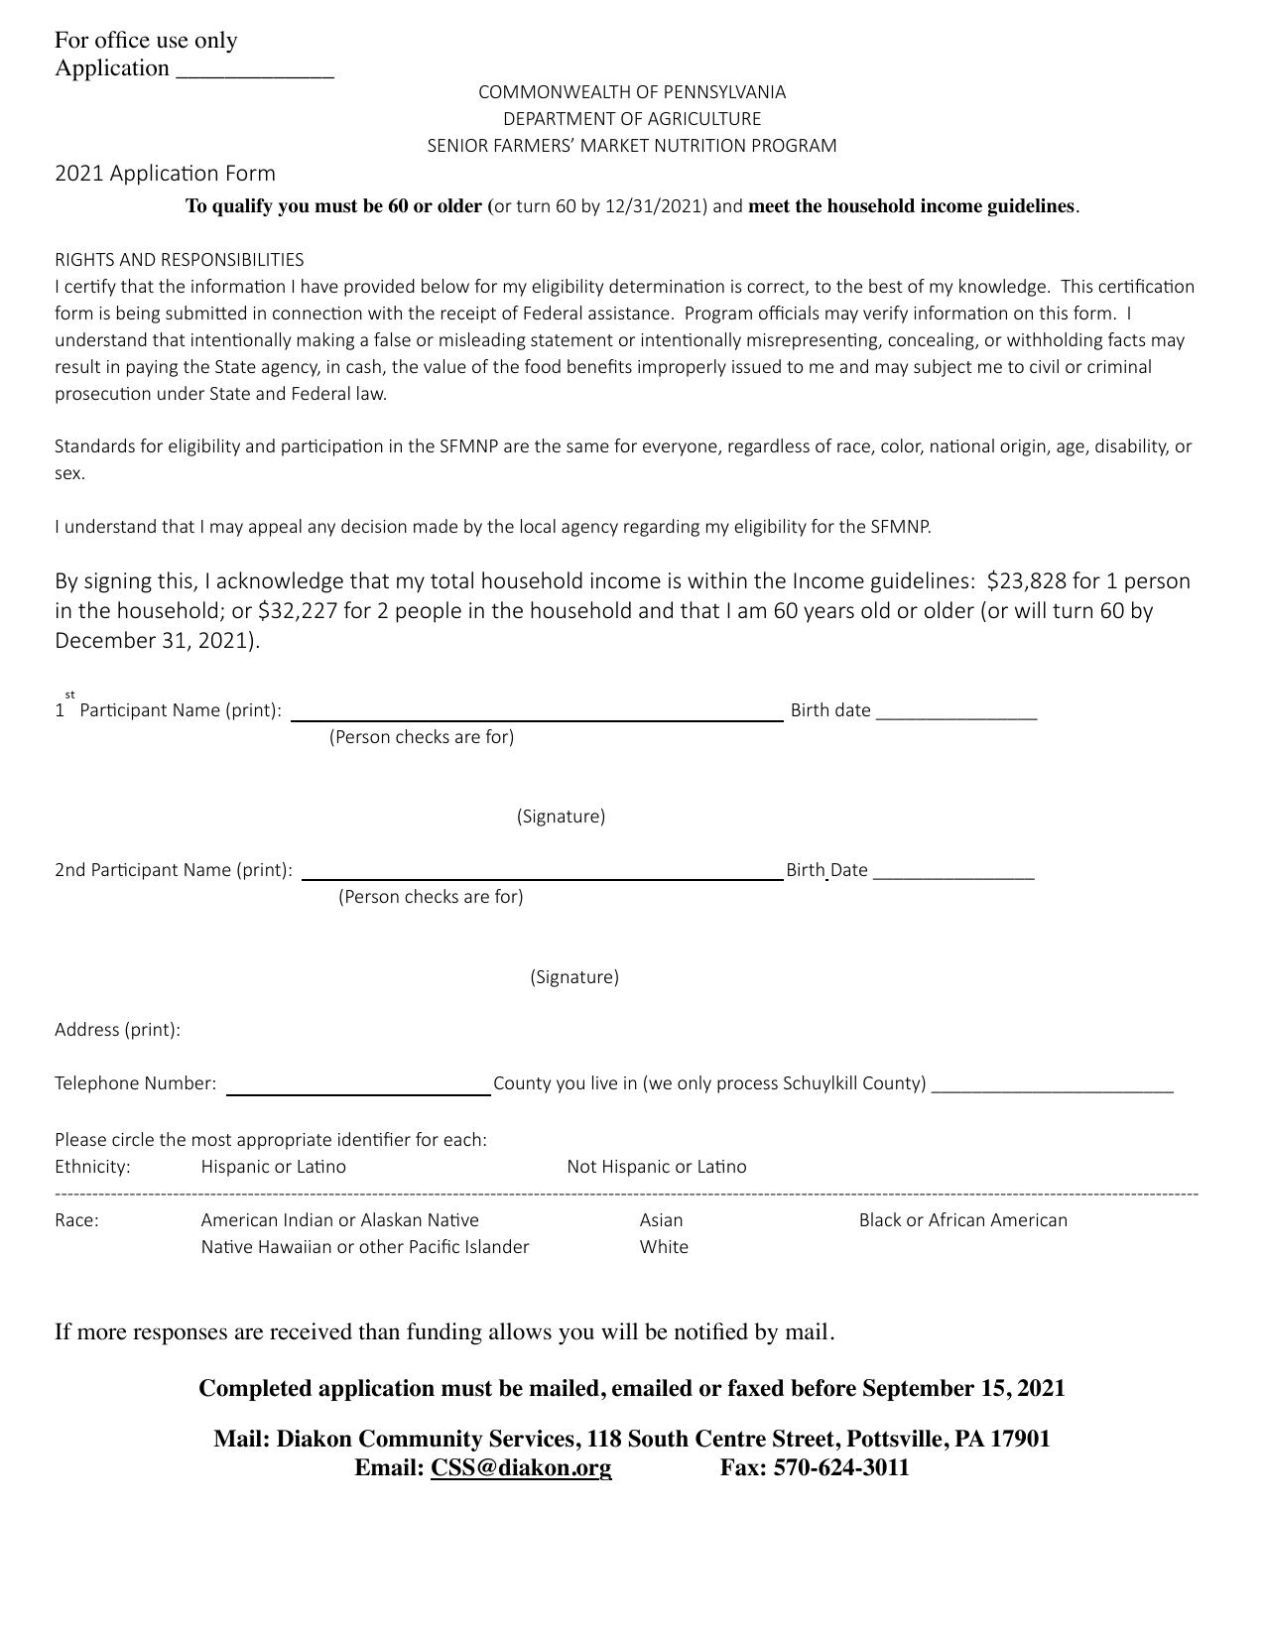 2021 SFMNP application for paper.pdf